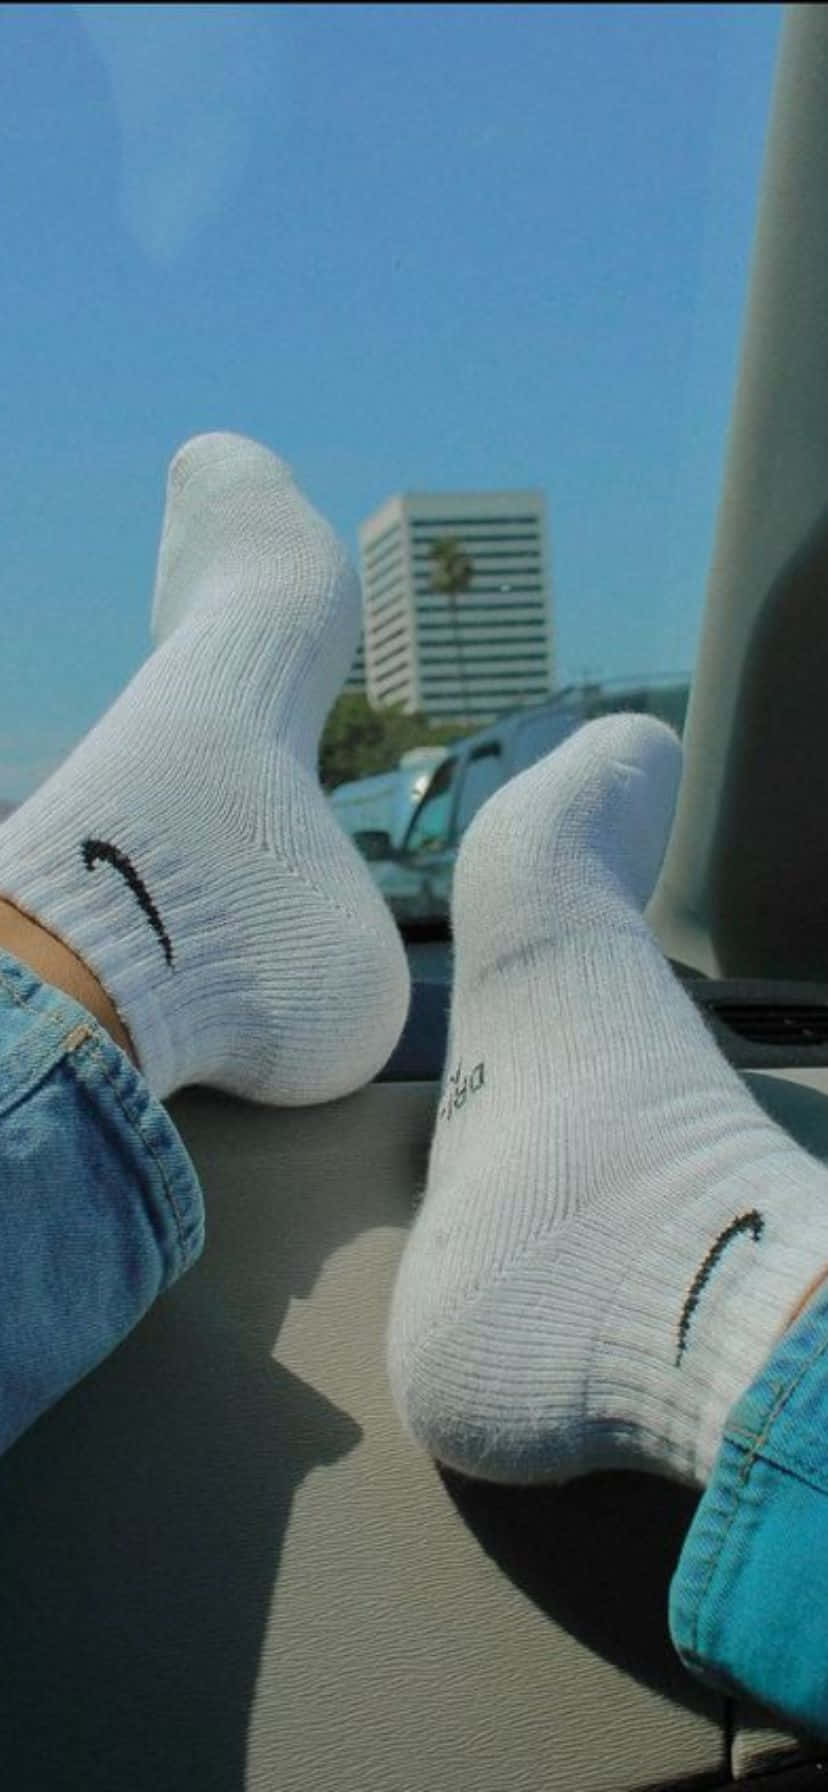 Feeton Car Dashboardin White Socks Wallpaper